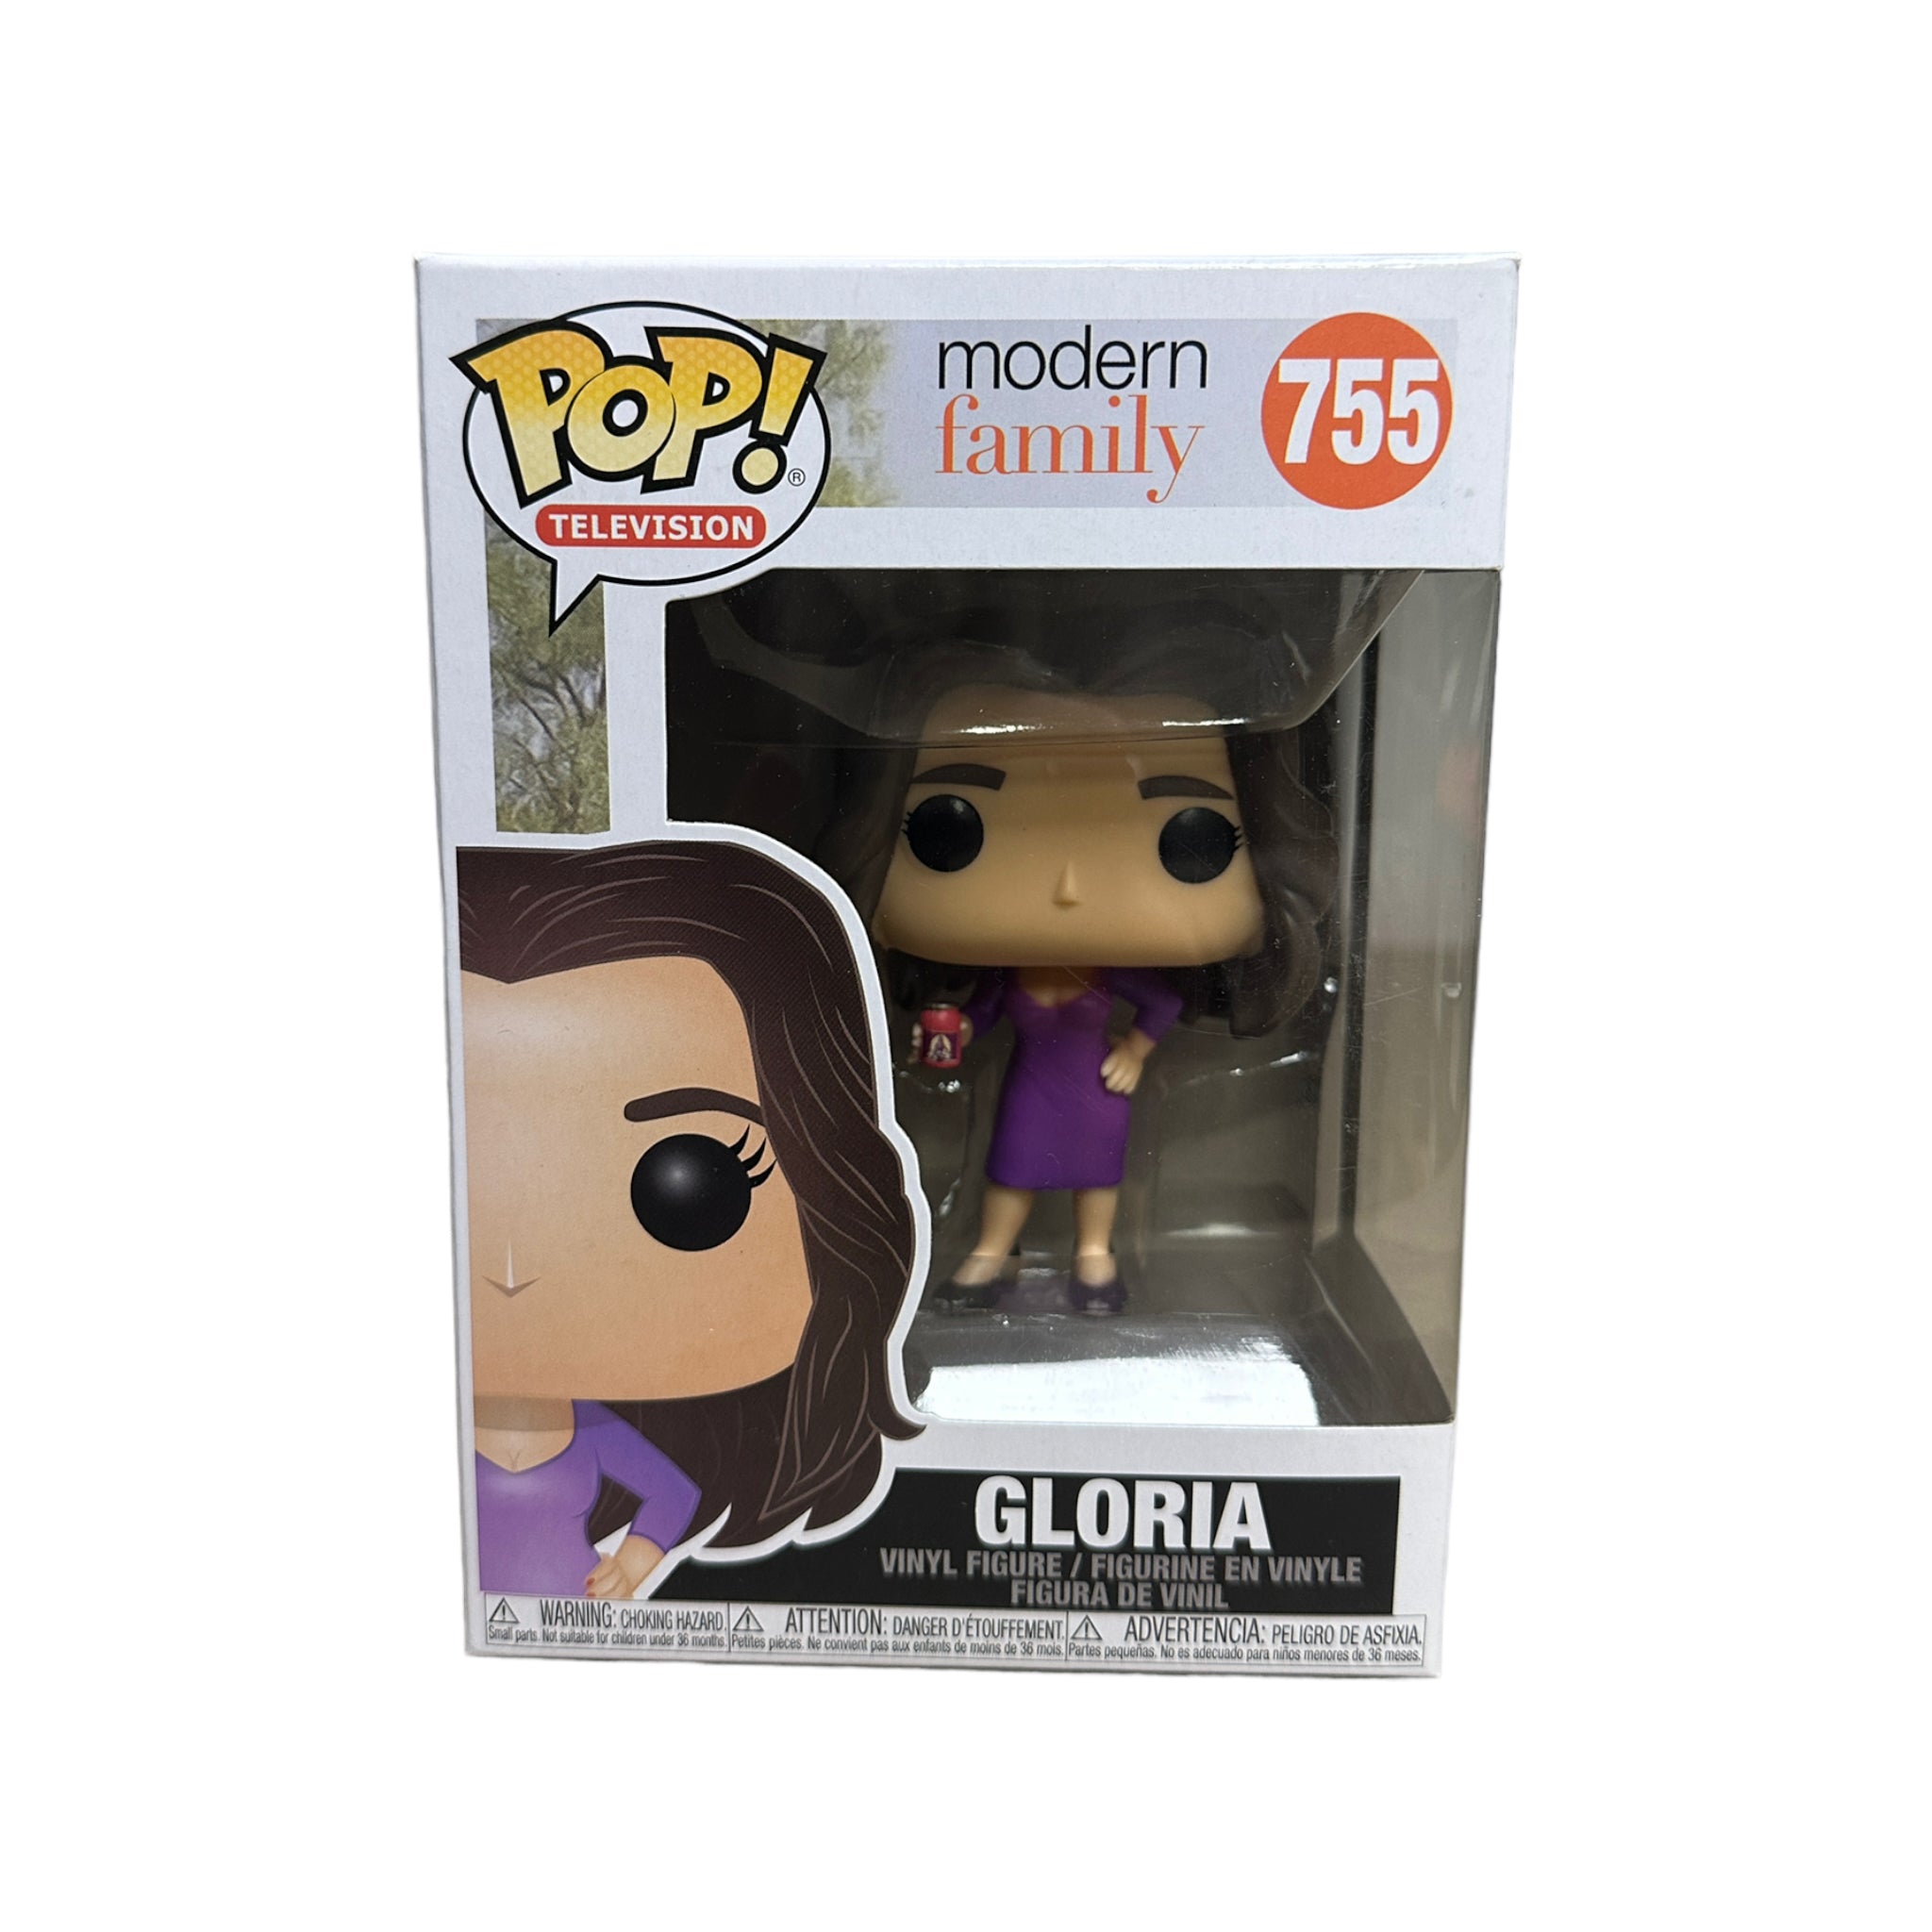 Gloria #755 Funko Pop! - Modern Family - 2018 Pop! - Condition 8.75/10